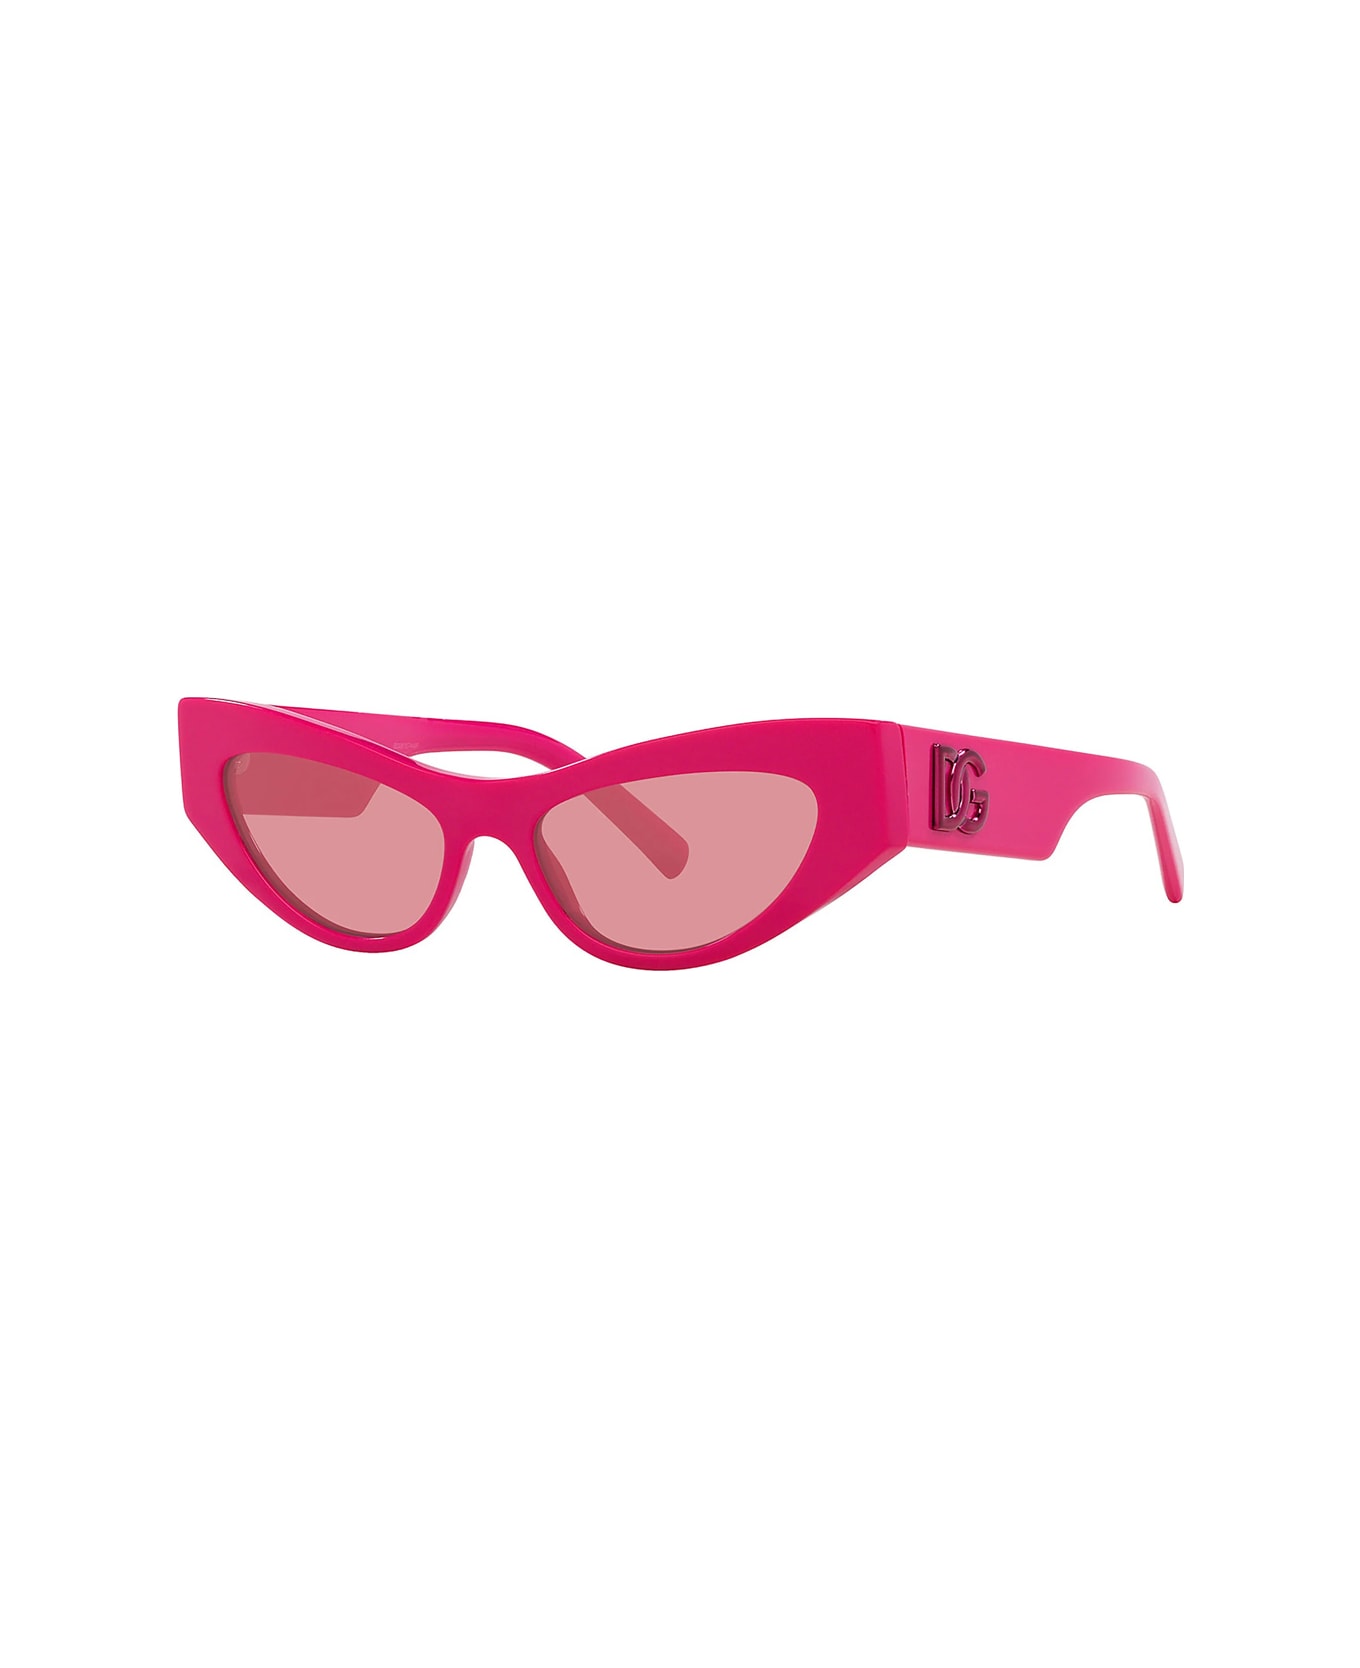 Dolce & Gabbana Eyewear Dg4450 326230 Sunglasses - Rosa サングラス